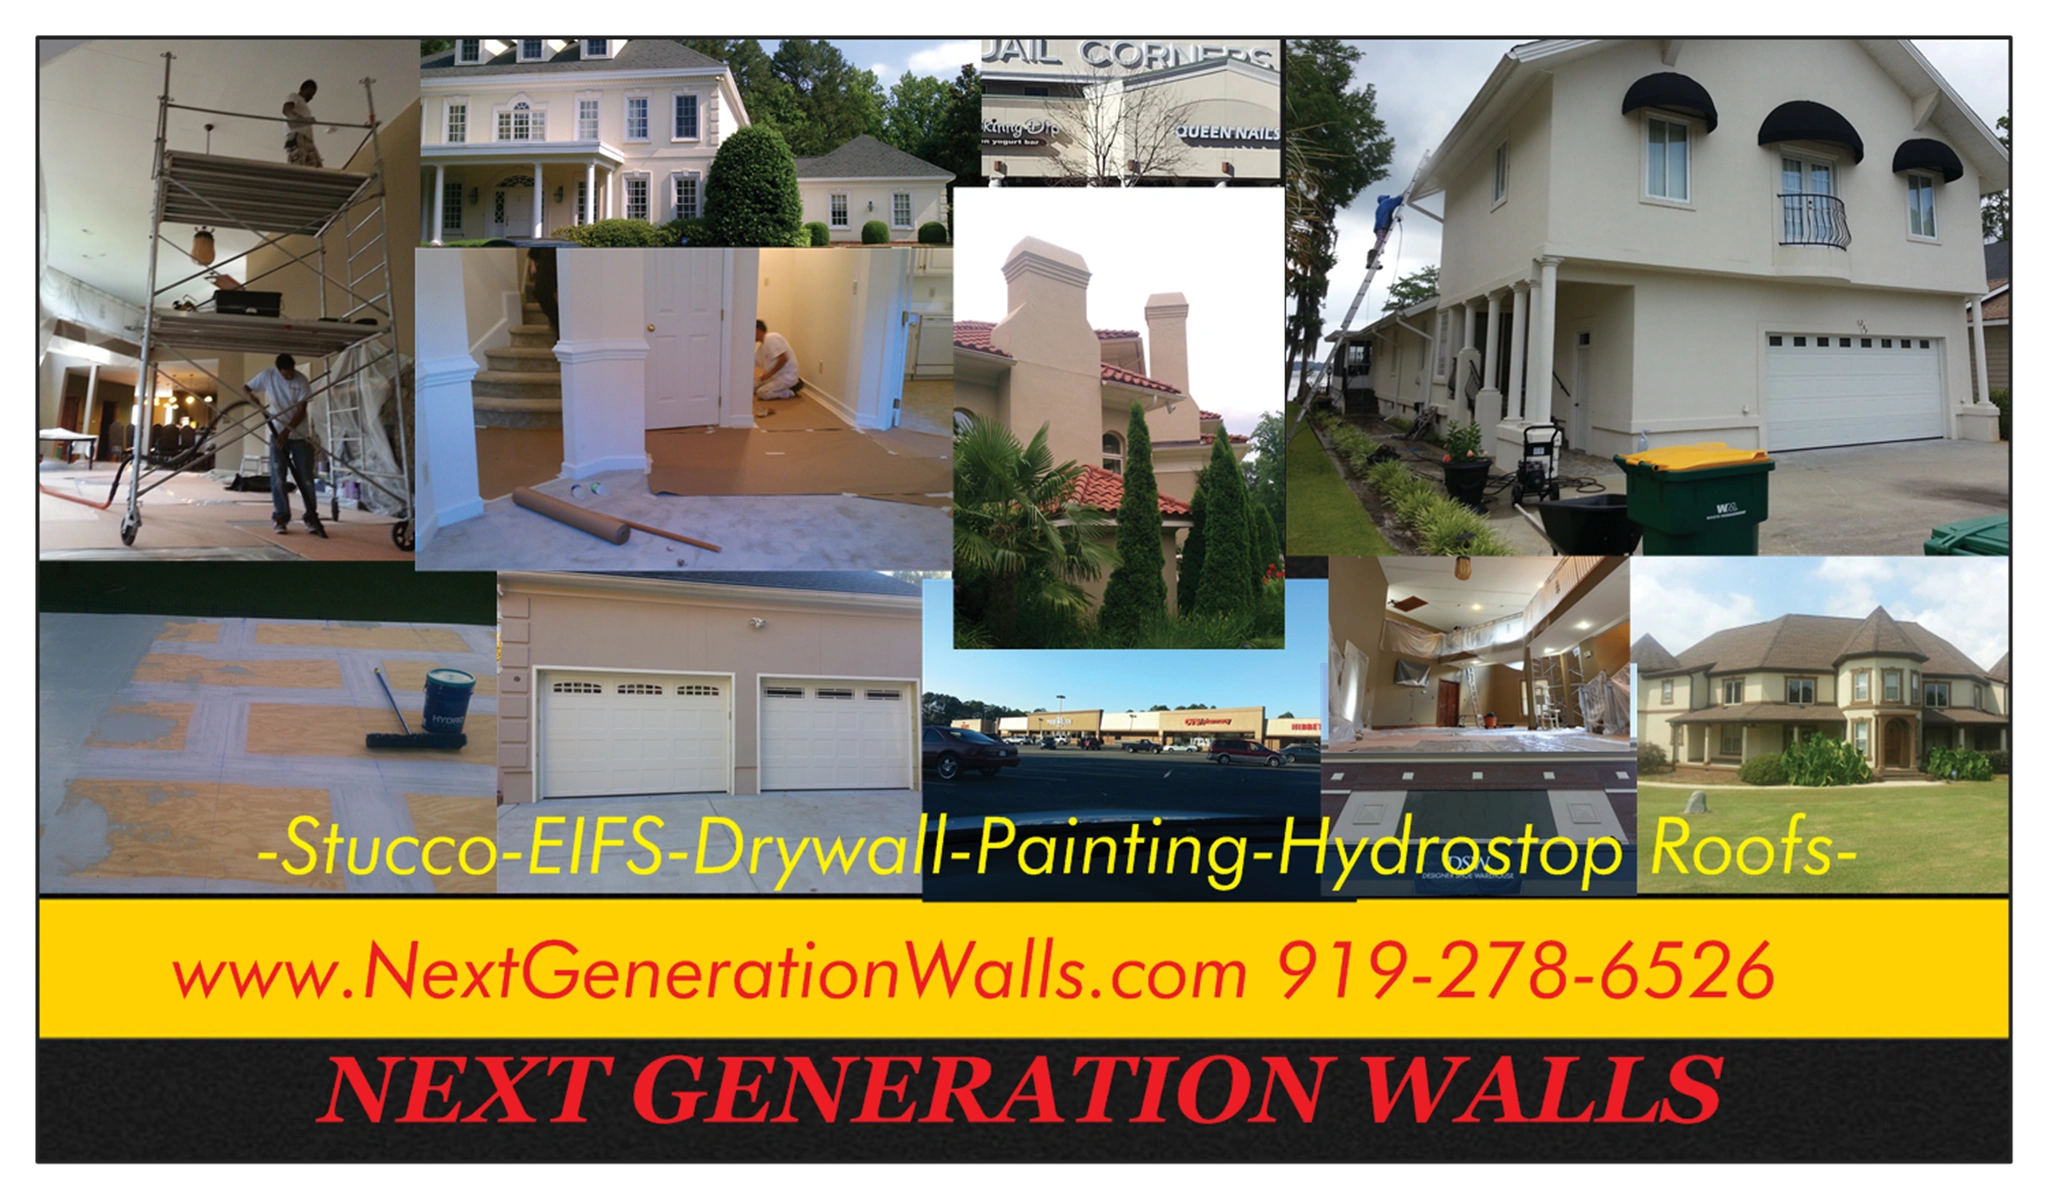 Next Generation Walls